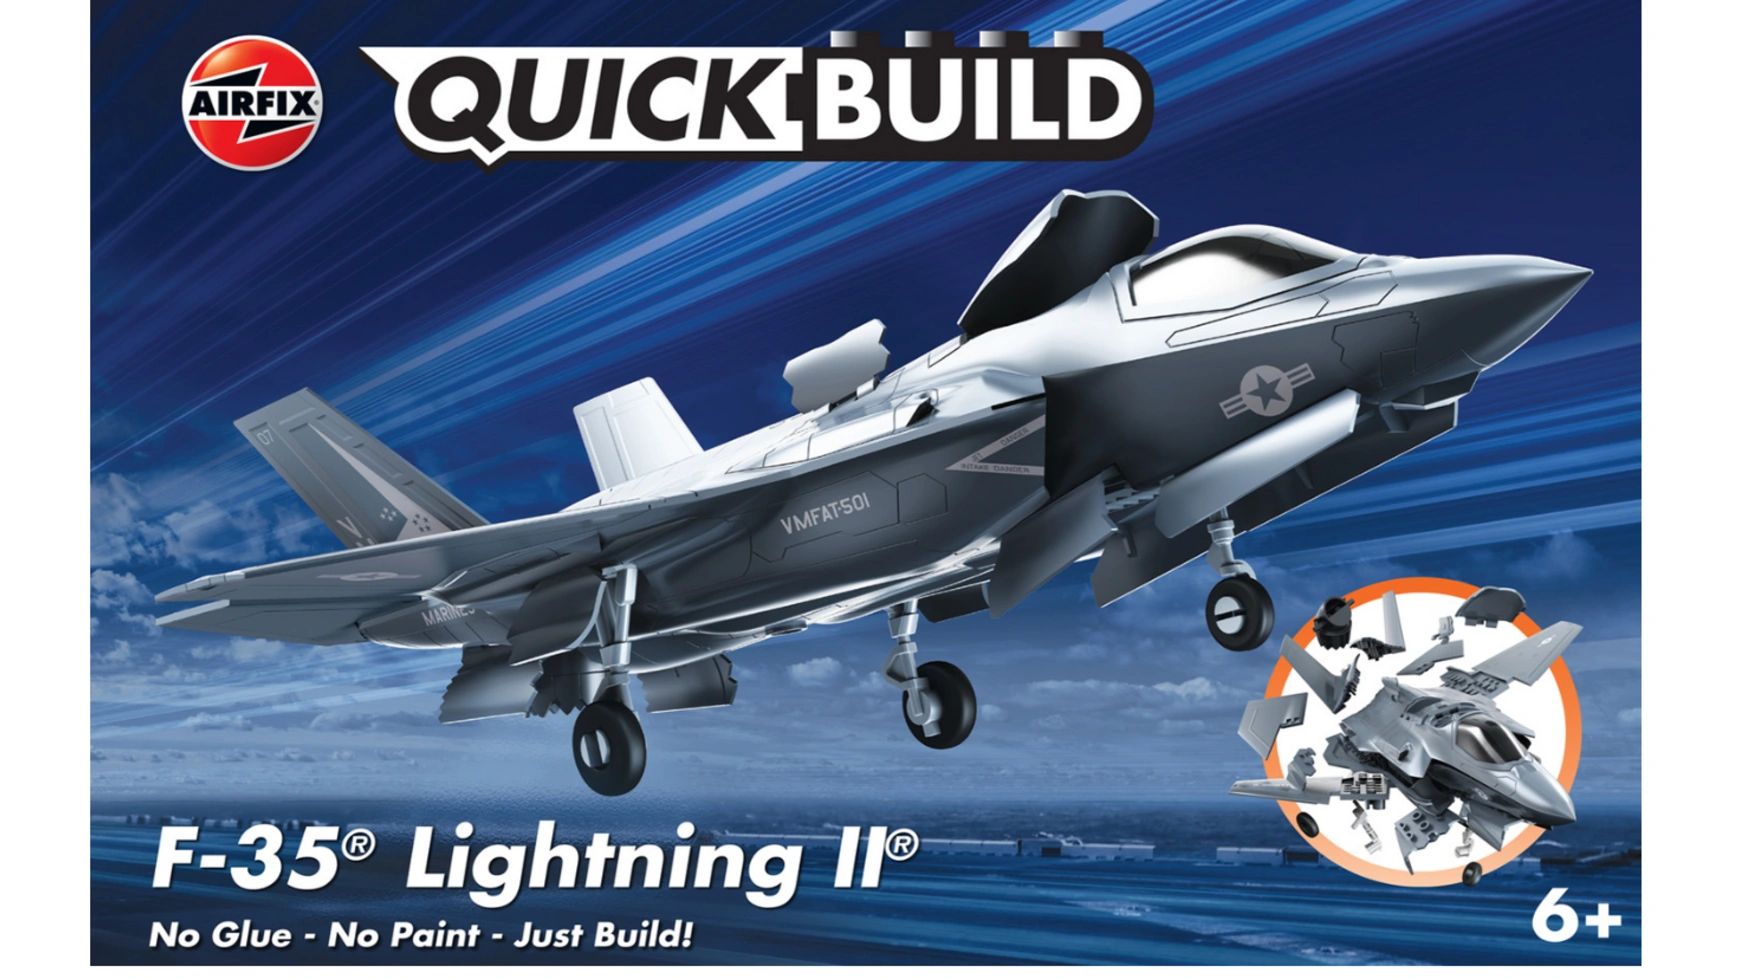 Airfix QUICKBUILD F-35B Lightning II air force f 35 lightning ii jet commemorative challenge coin free shipping